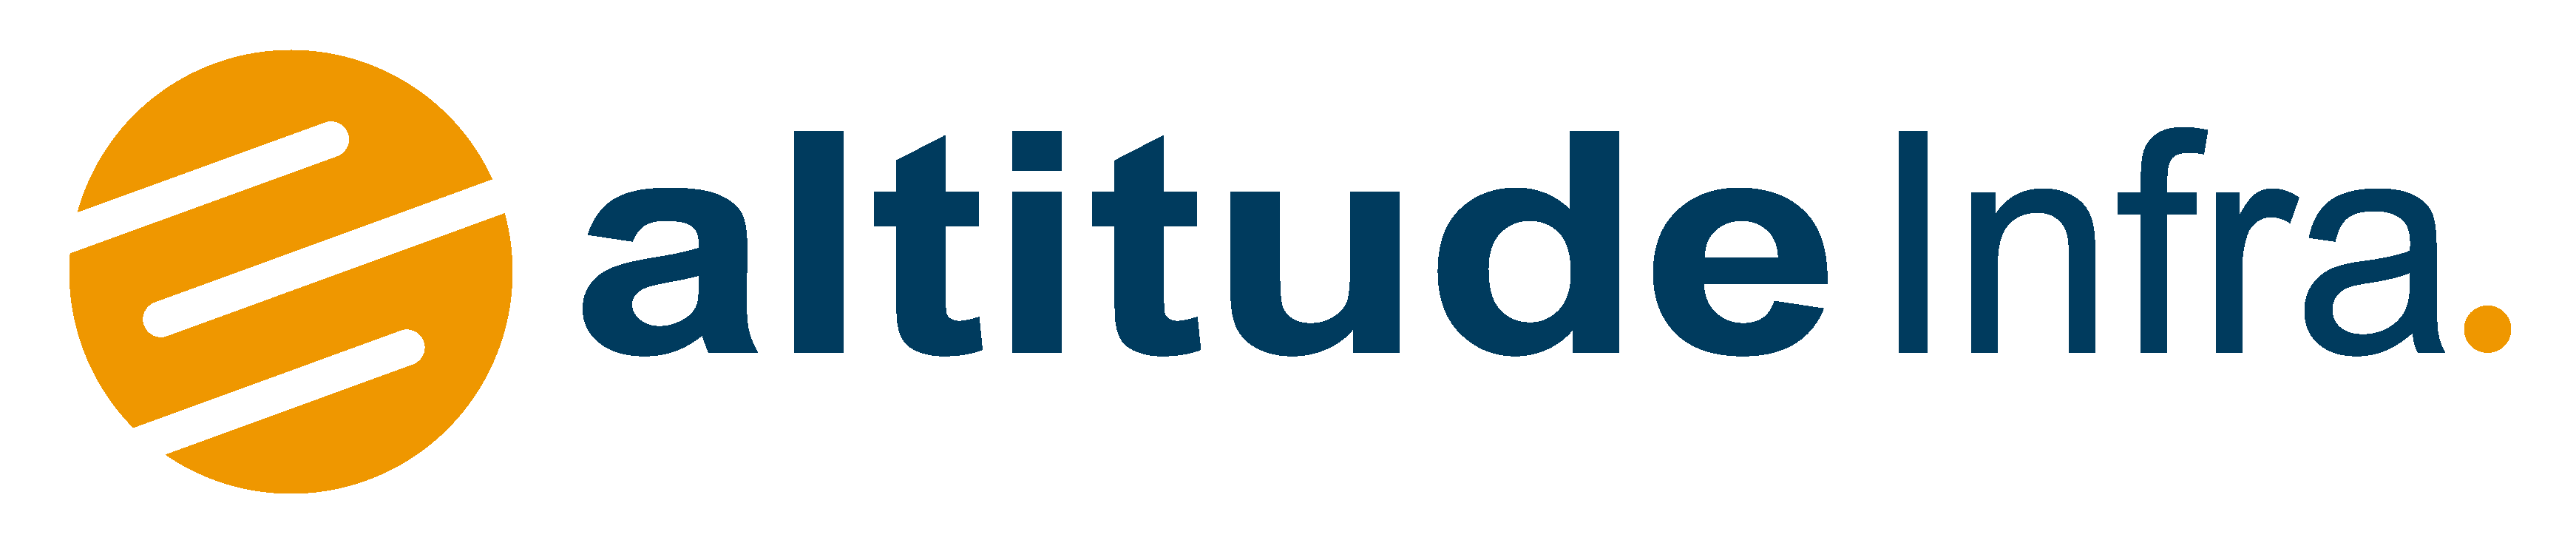 Logo altitude infrastructure